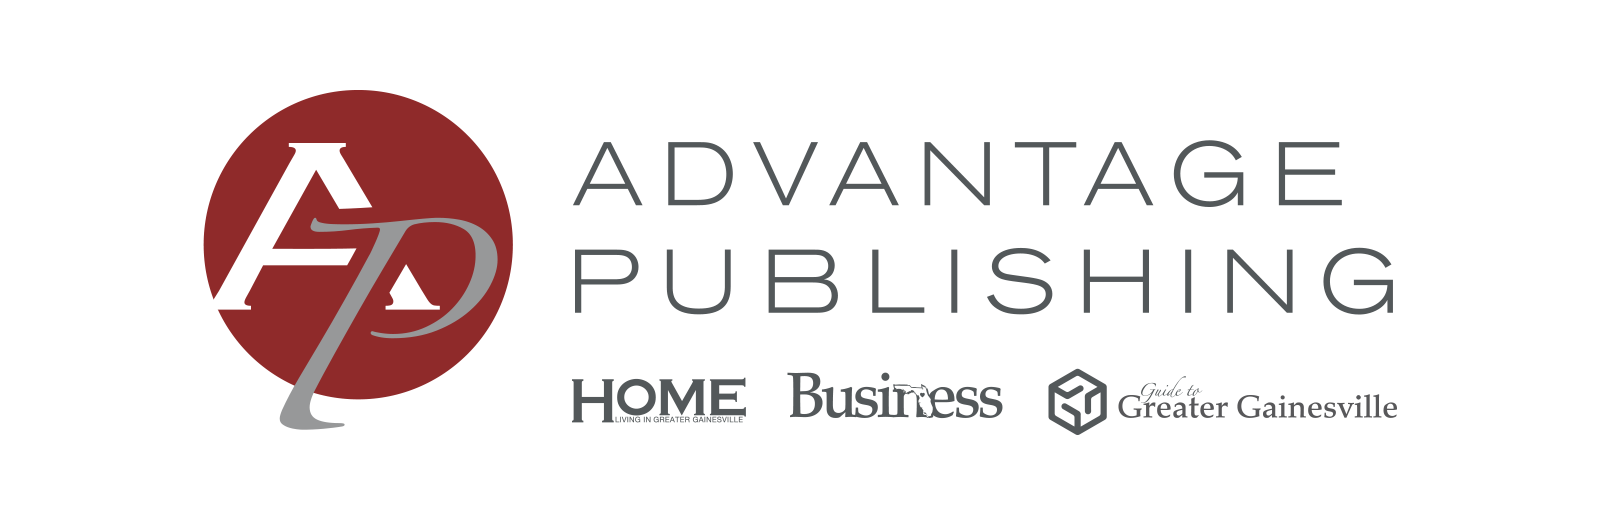 Advantage Publishing